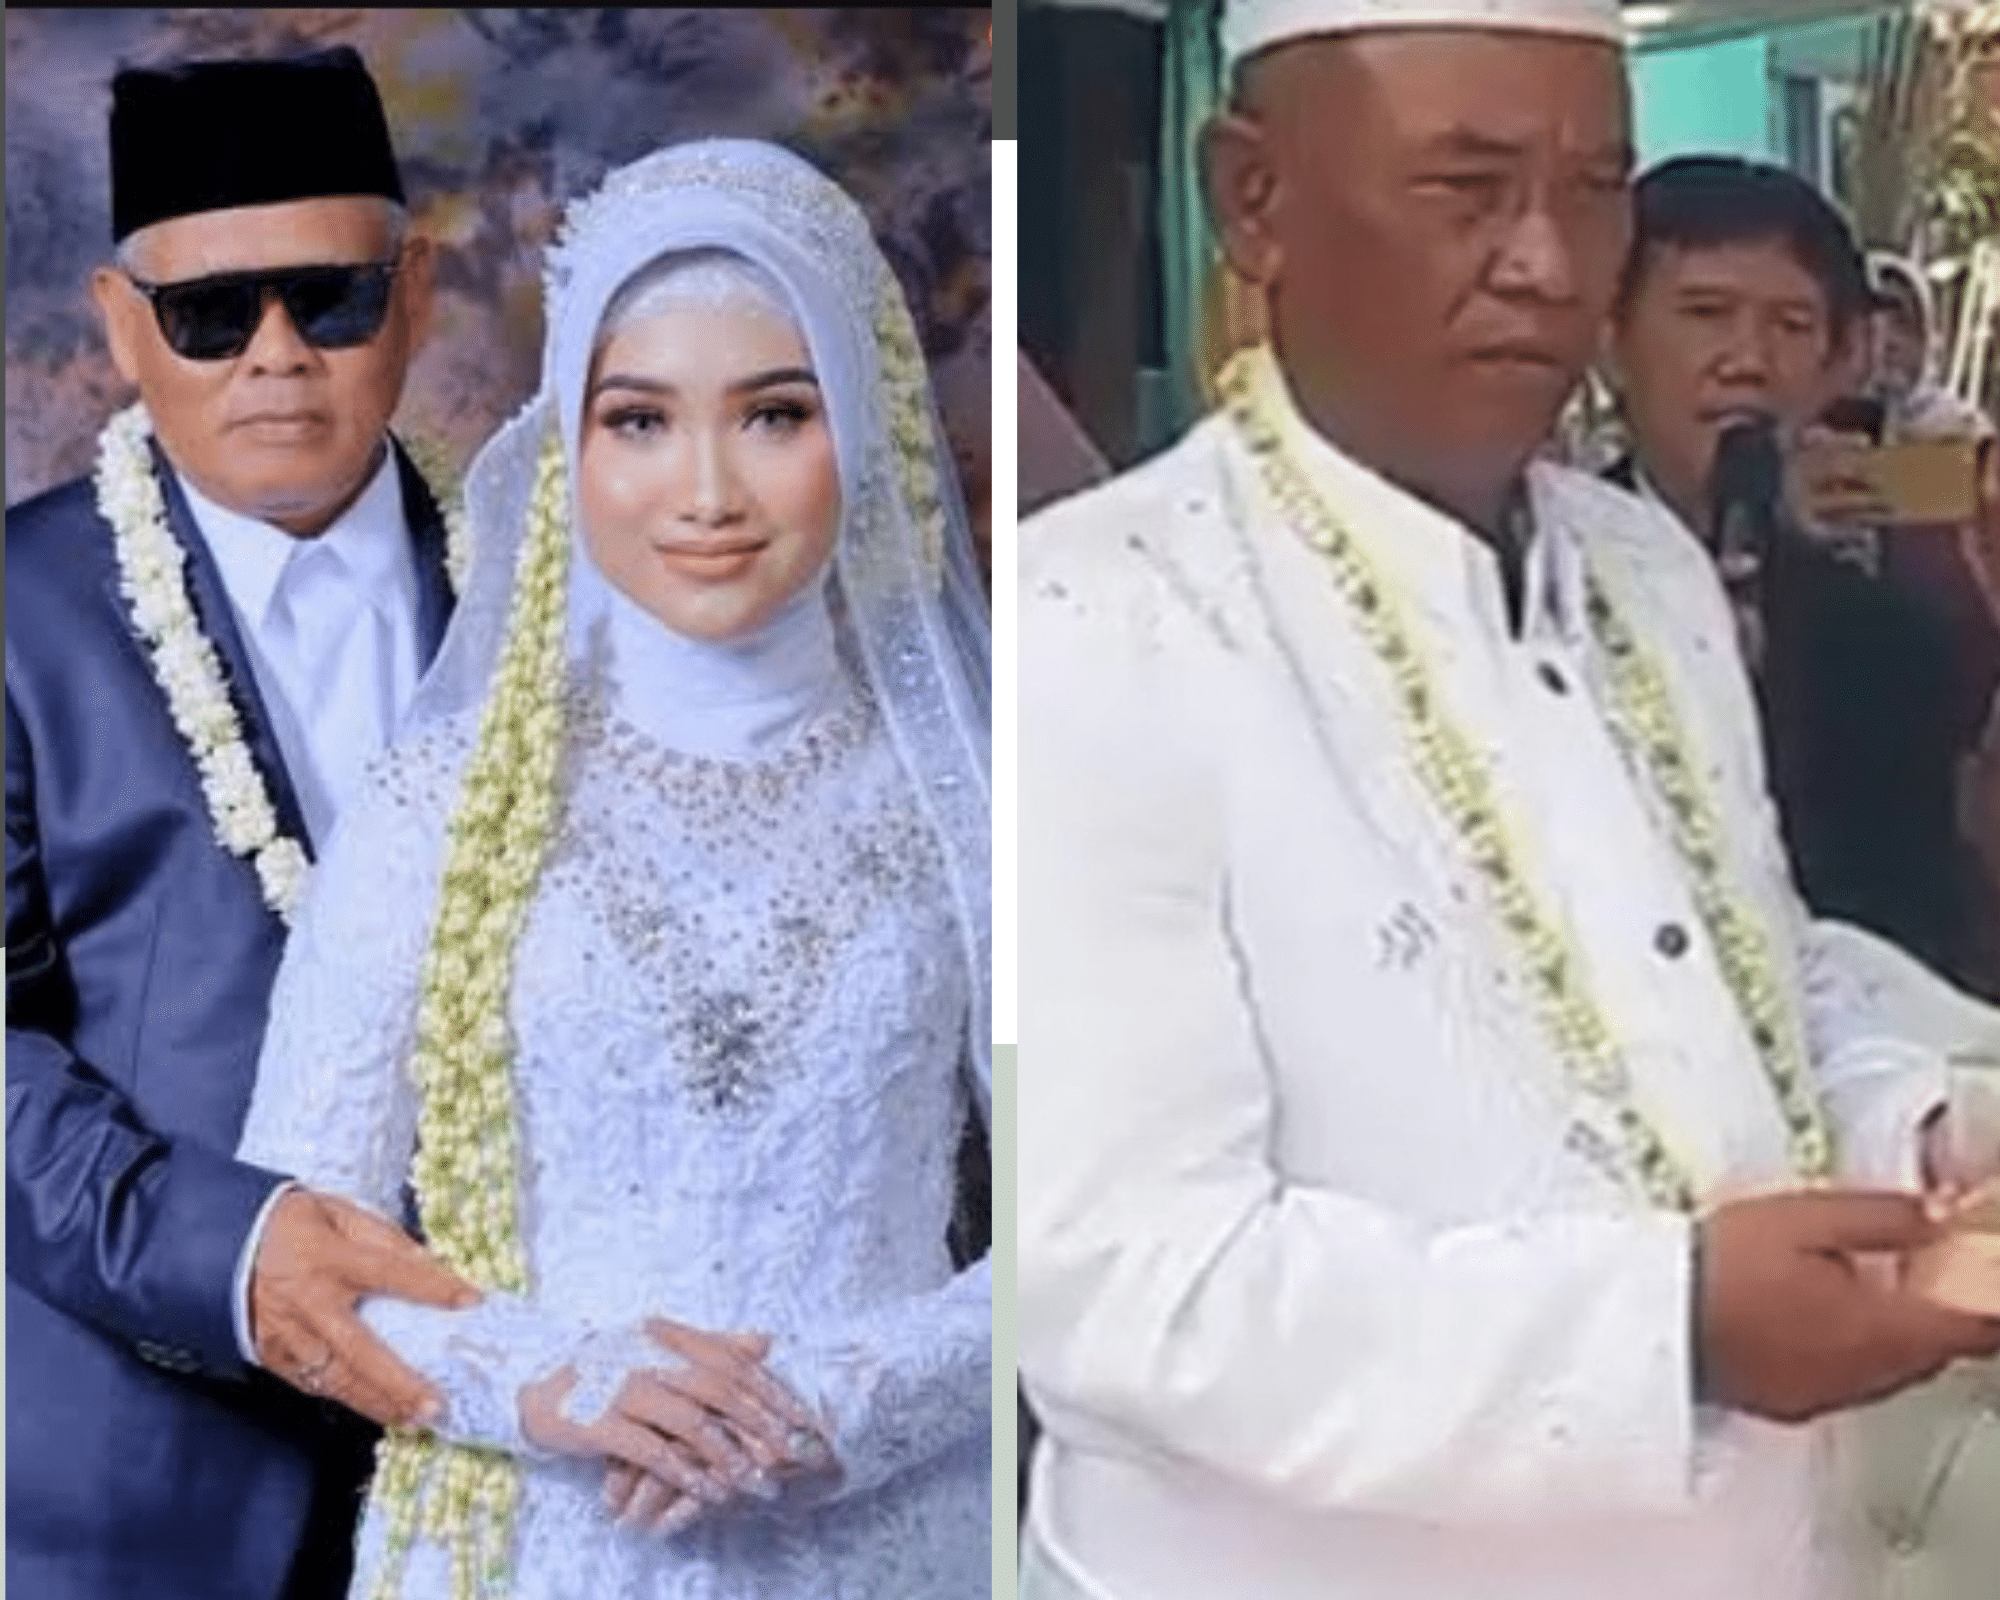 H Sondani Tegal Gubug, Jejaknya Diikuti H Romansyah dari Subang, Sama-sama Menikah dengan Gadis 19 Tahun